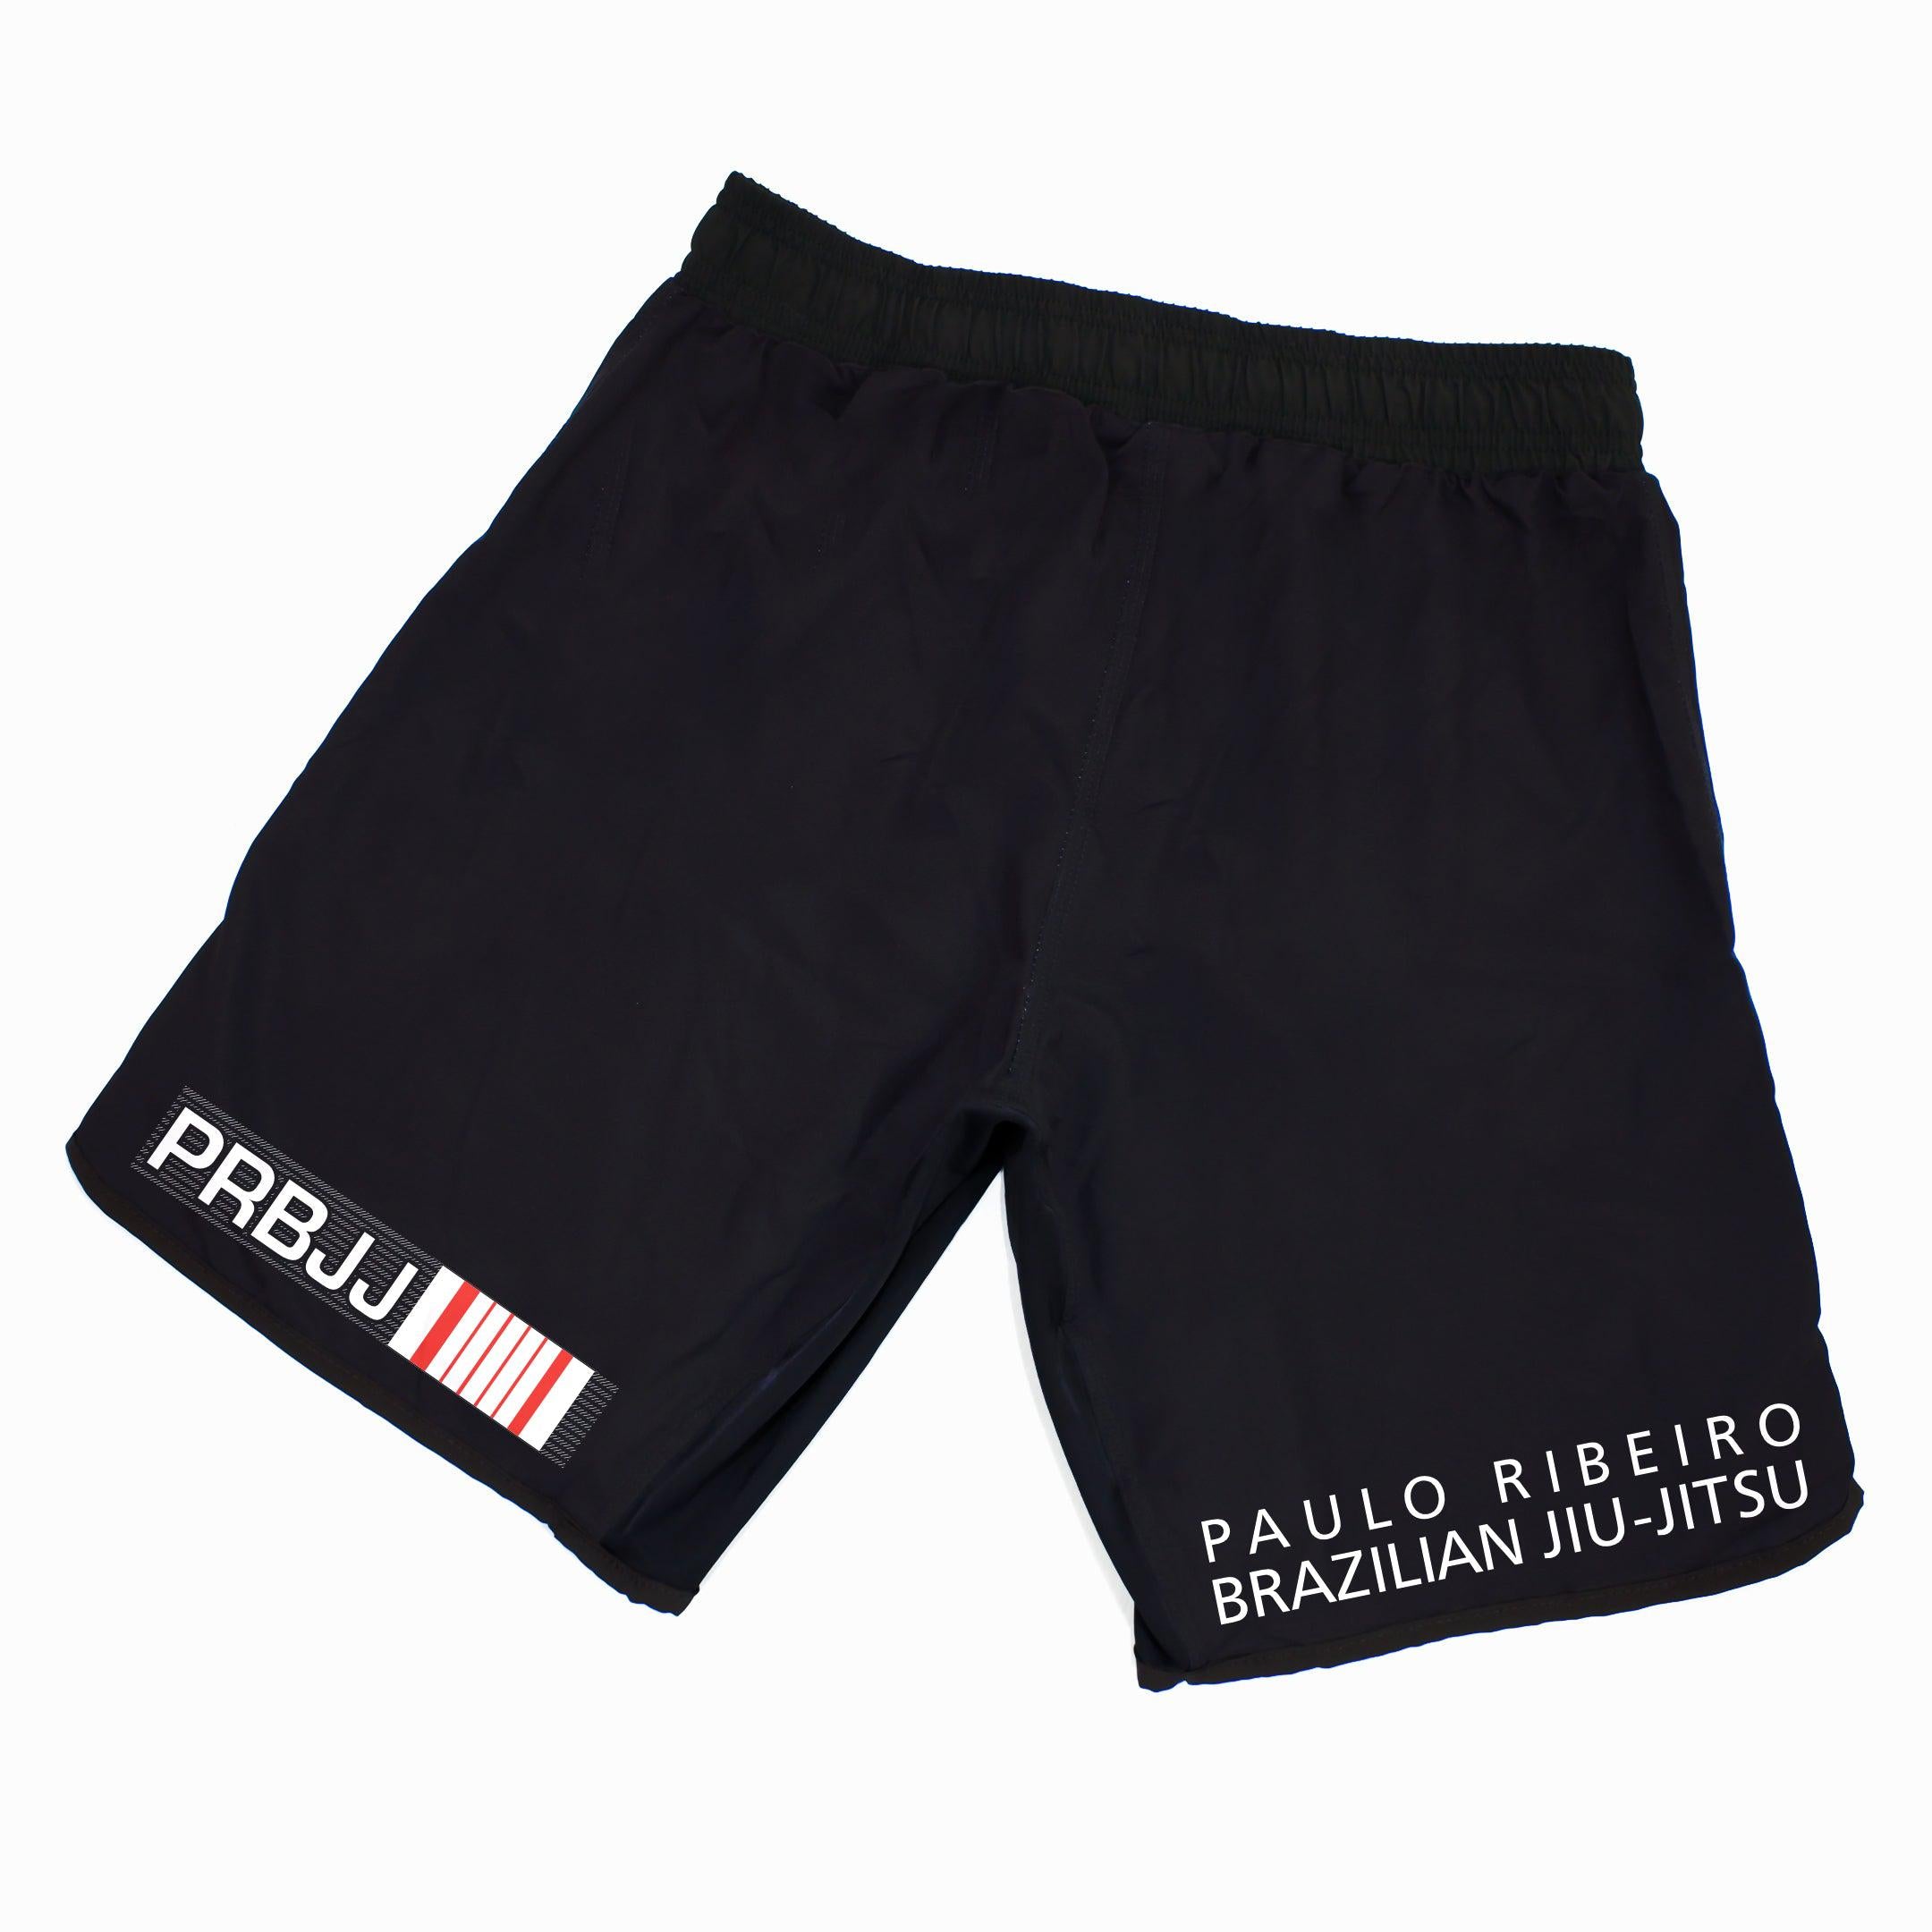 Paulo Ribeiro BJJ Grappling Shorts - Zenko Fightwear